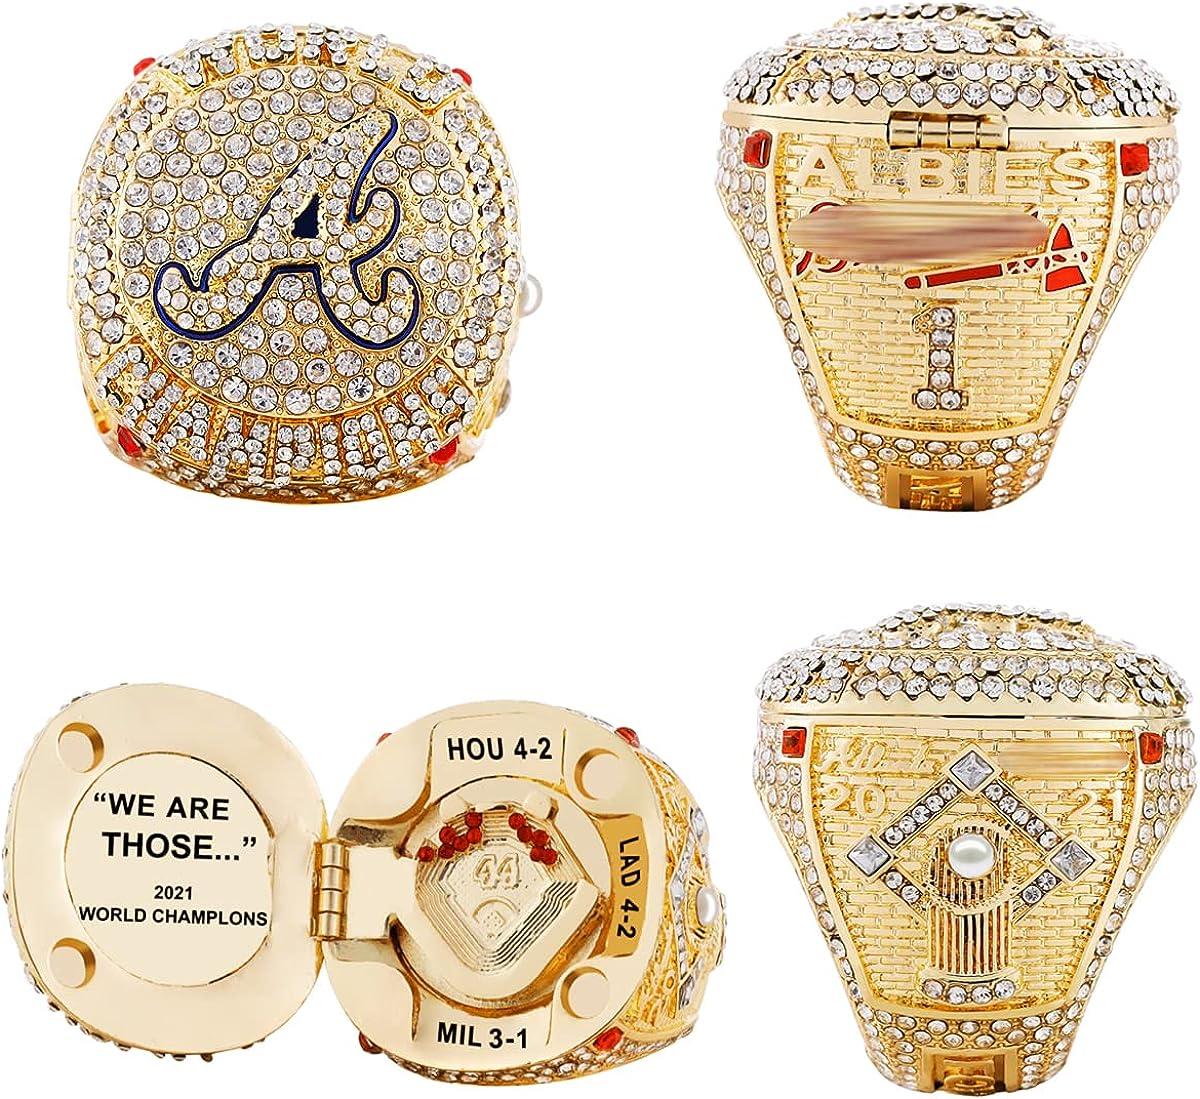 2021 Atlanta Braves World Series Championship Ring - www